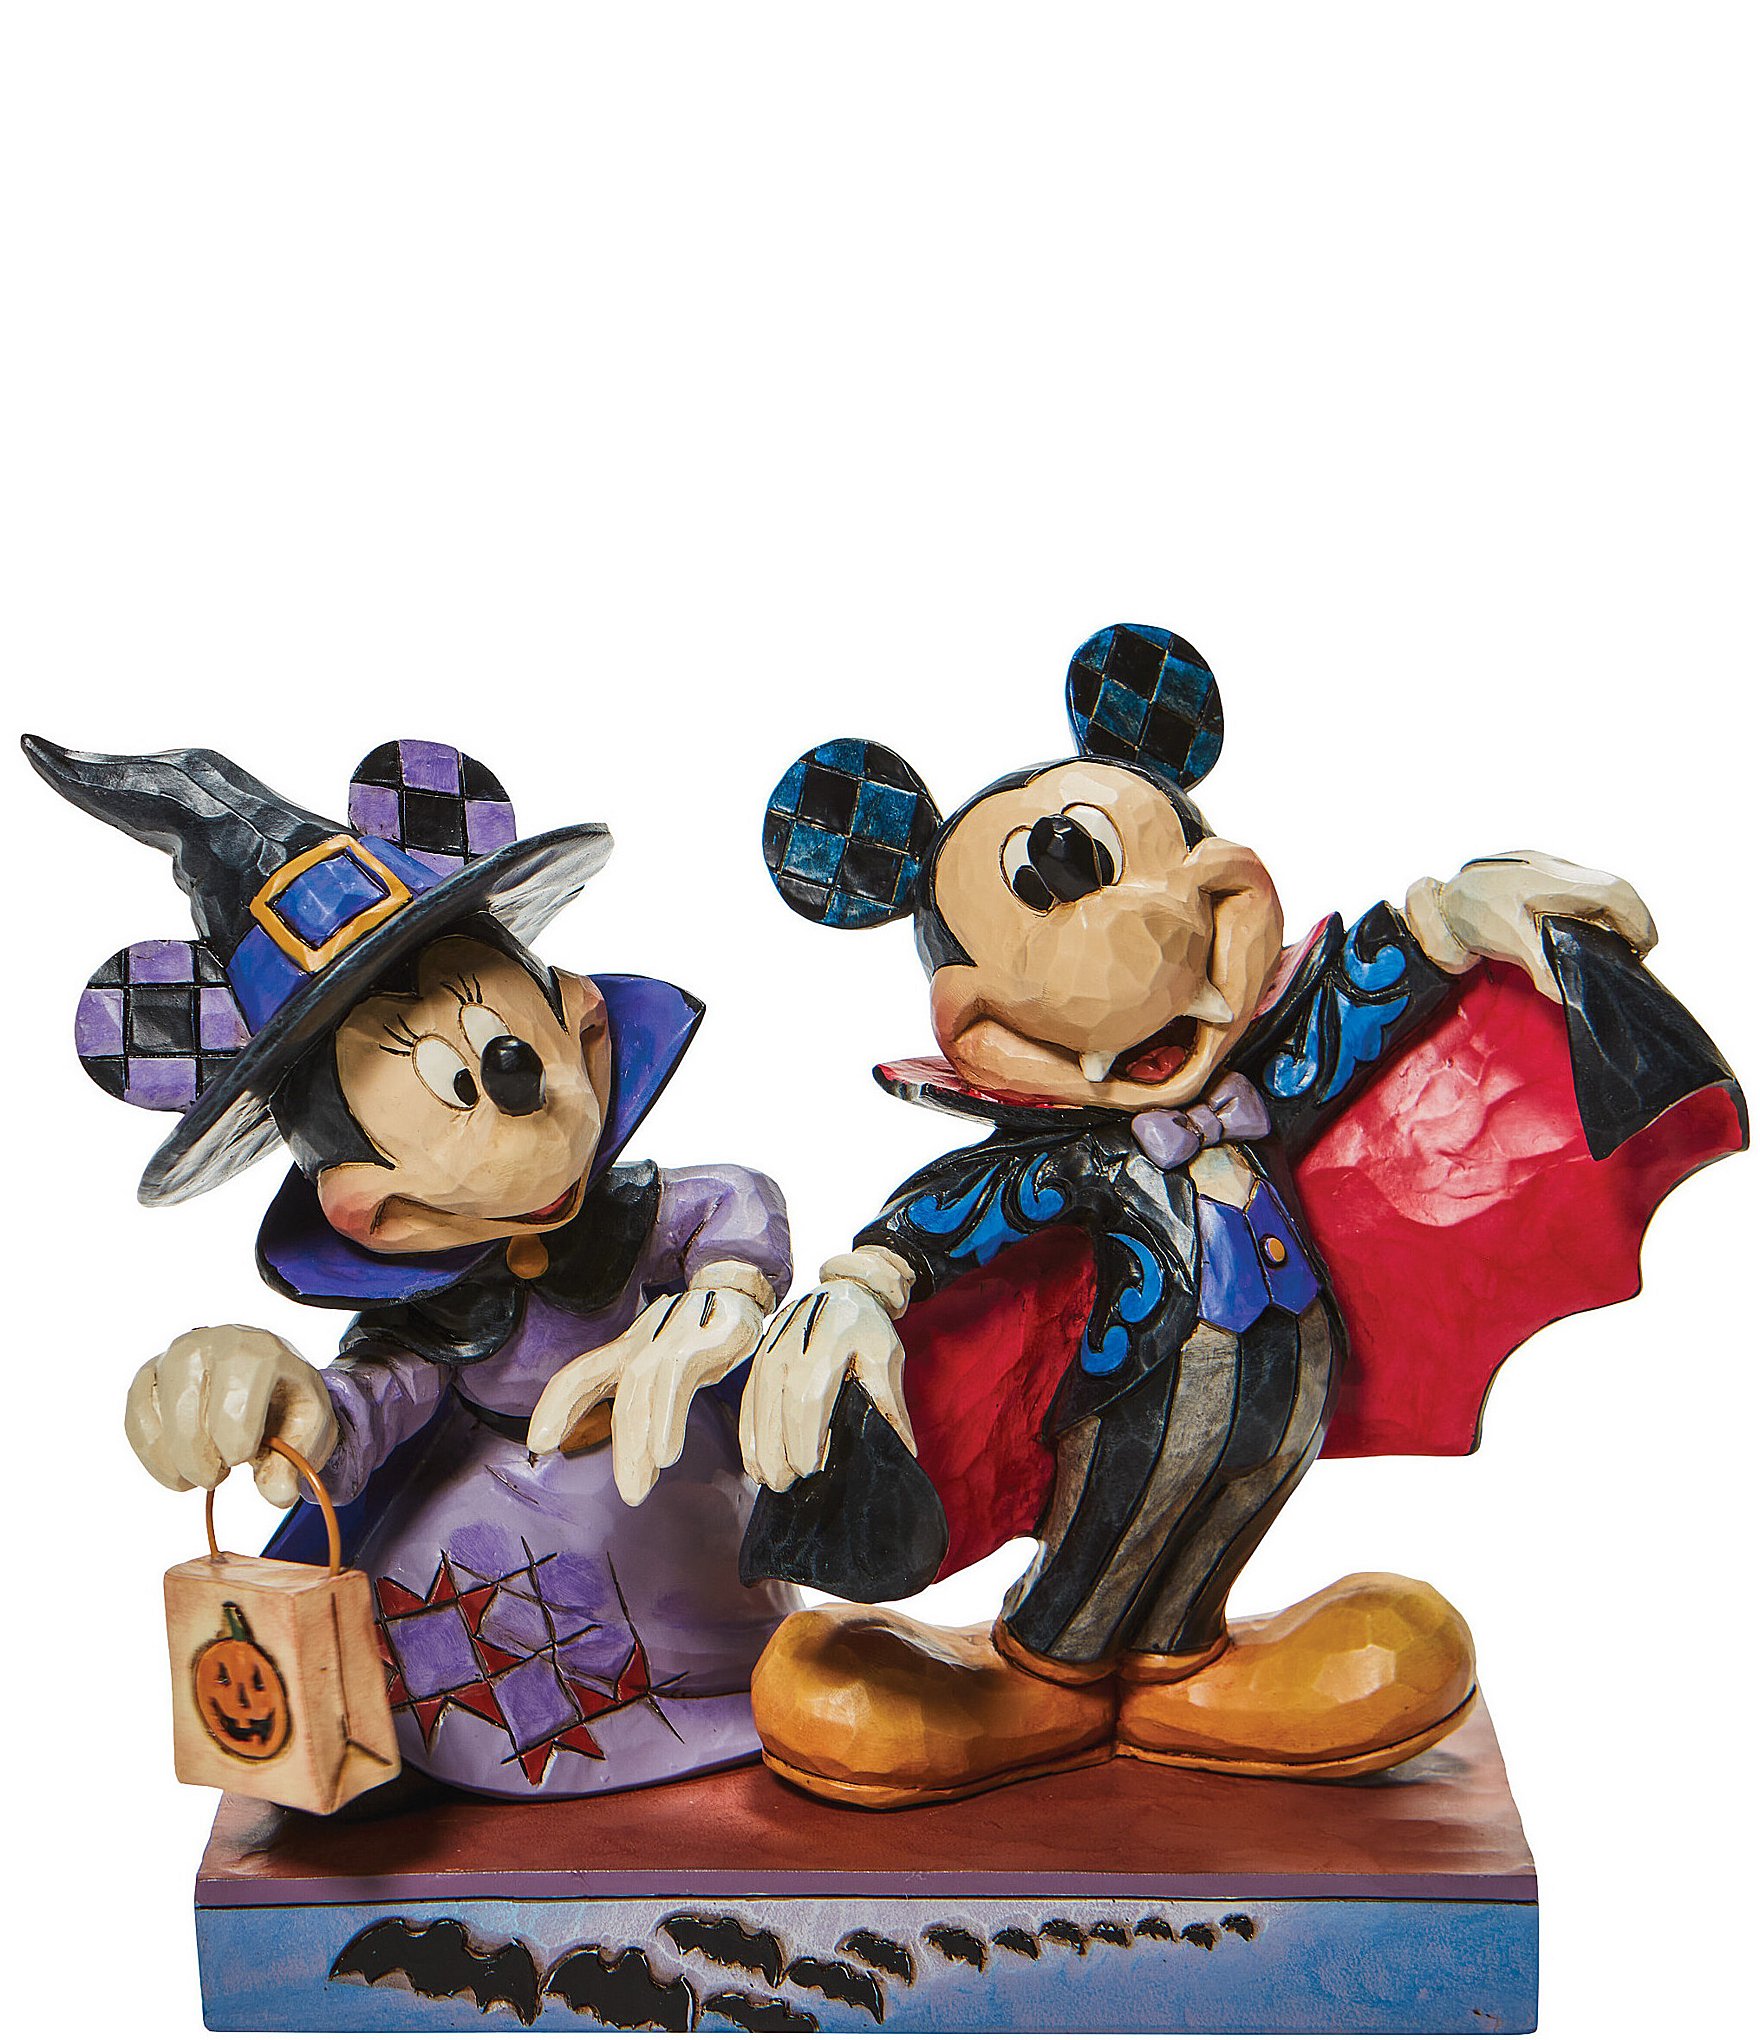 Disney Traditions Halloween Mickey Frankenstein Figurine by Jim